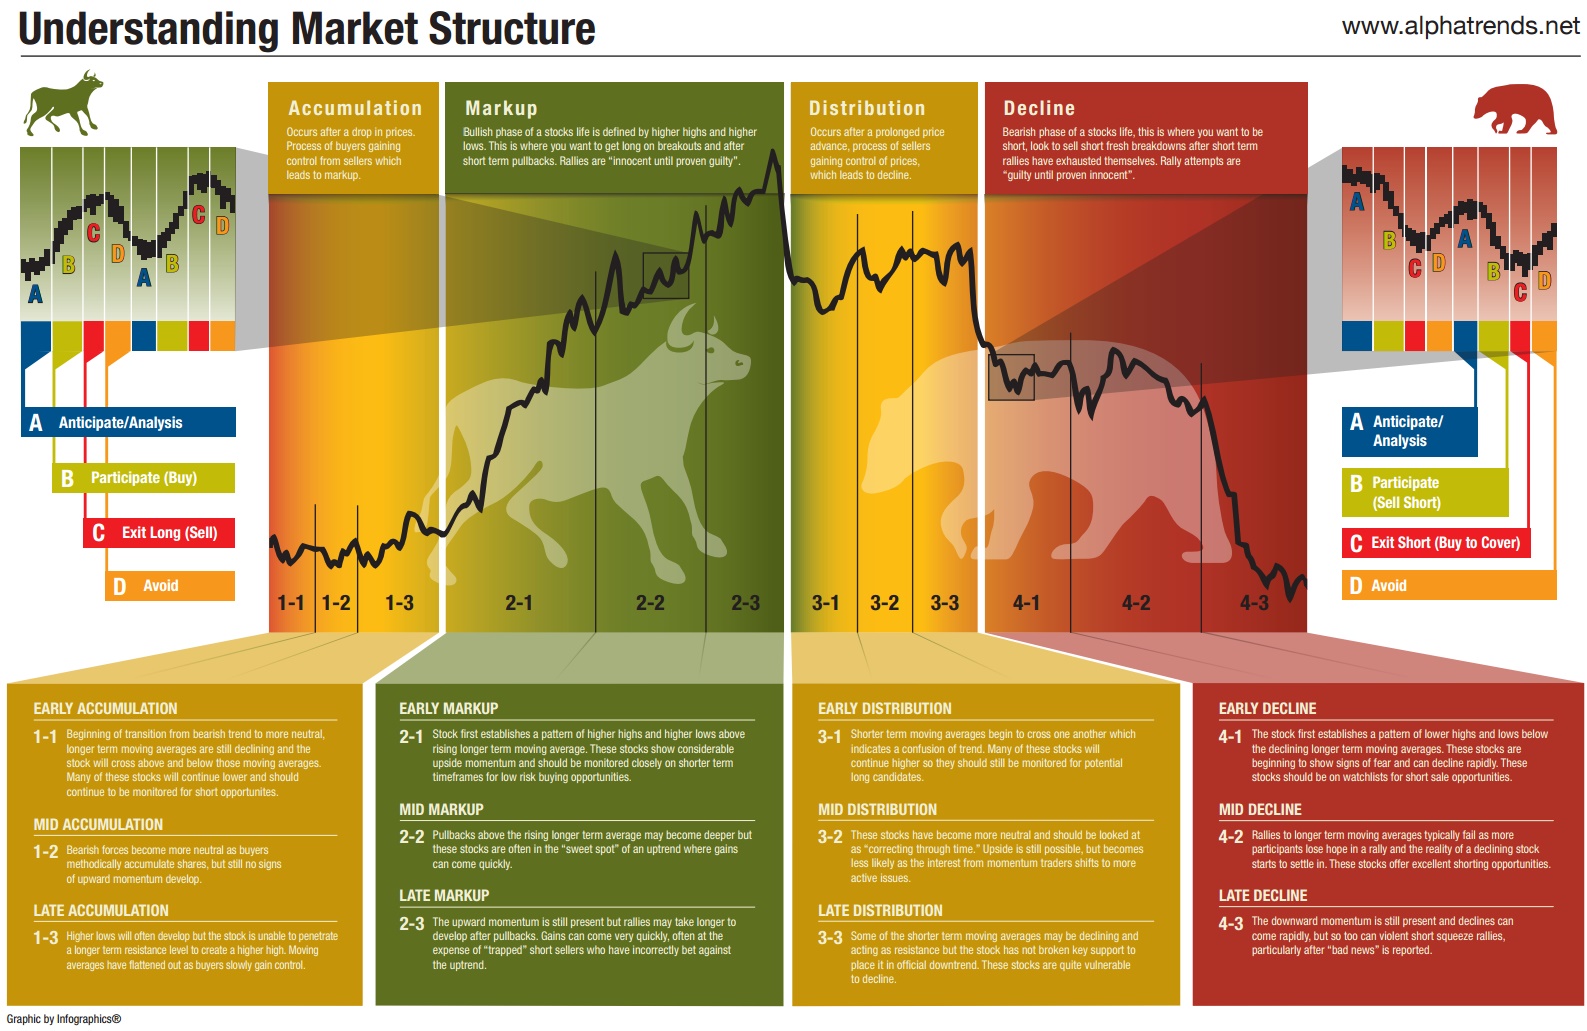 Understanding Market Structure